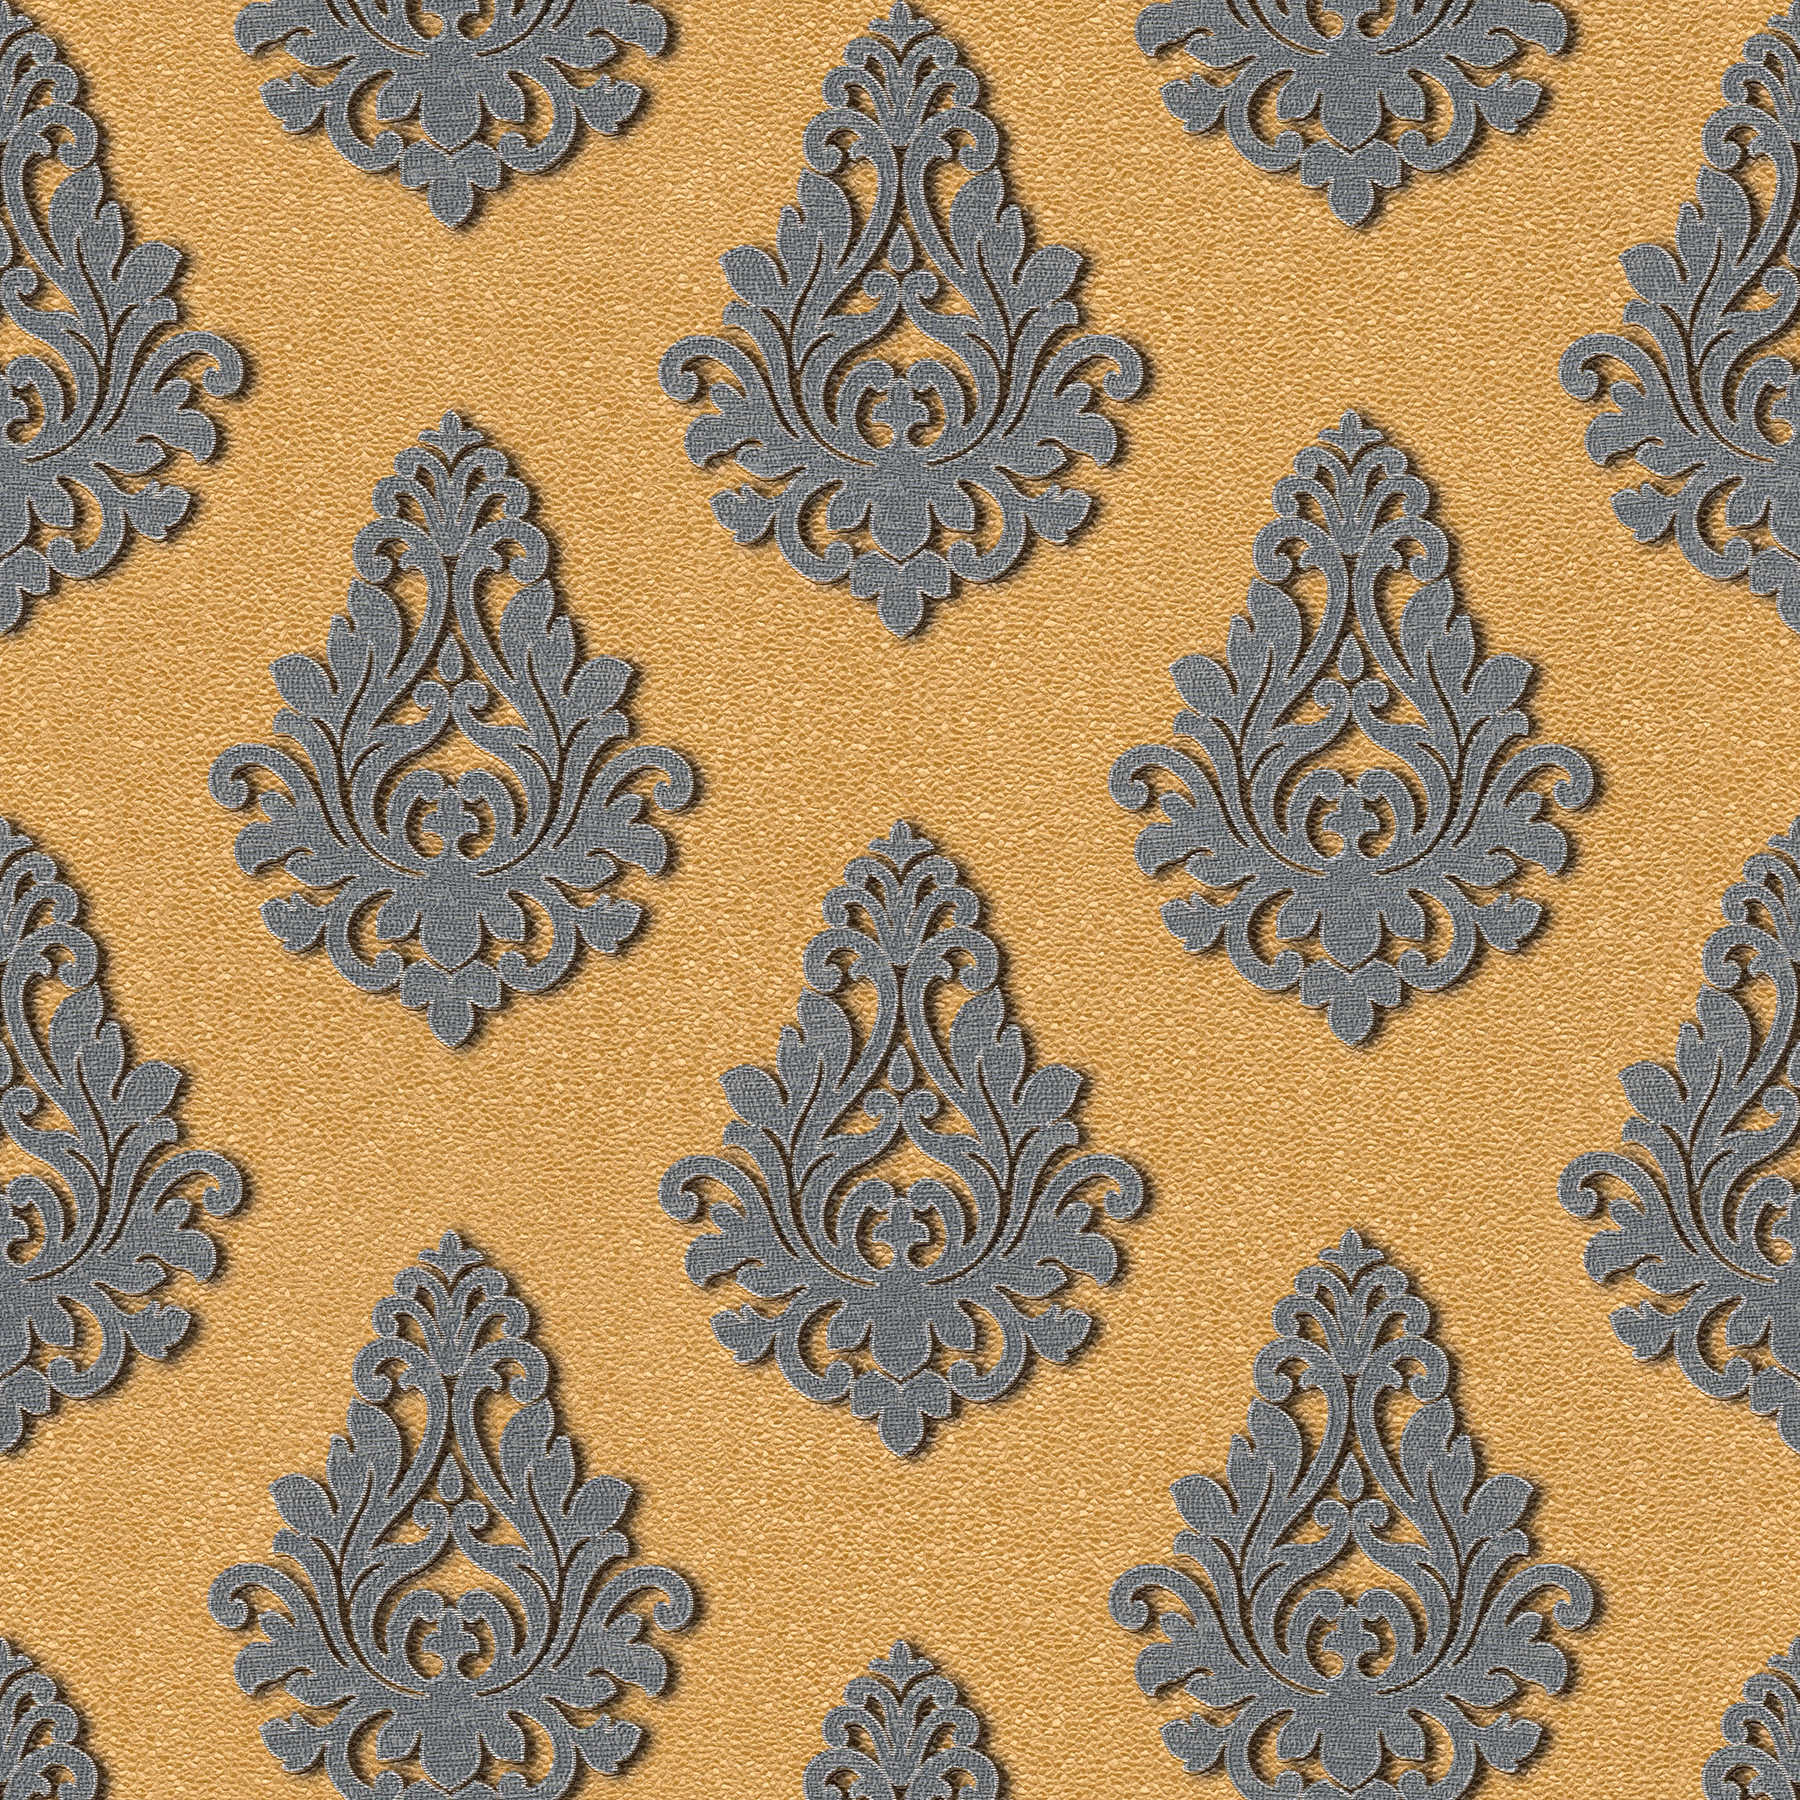 Non-woven wallpaper with baroque ornaments - gold, grey
